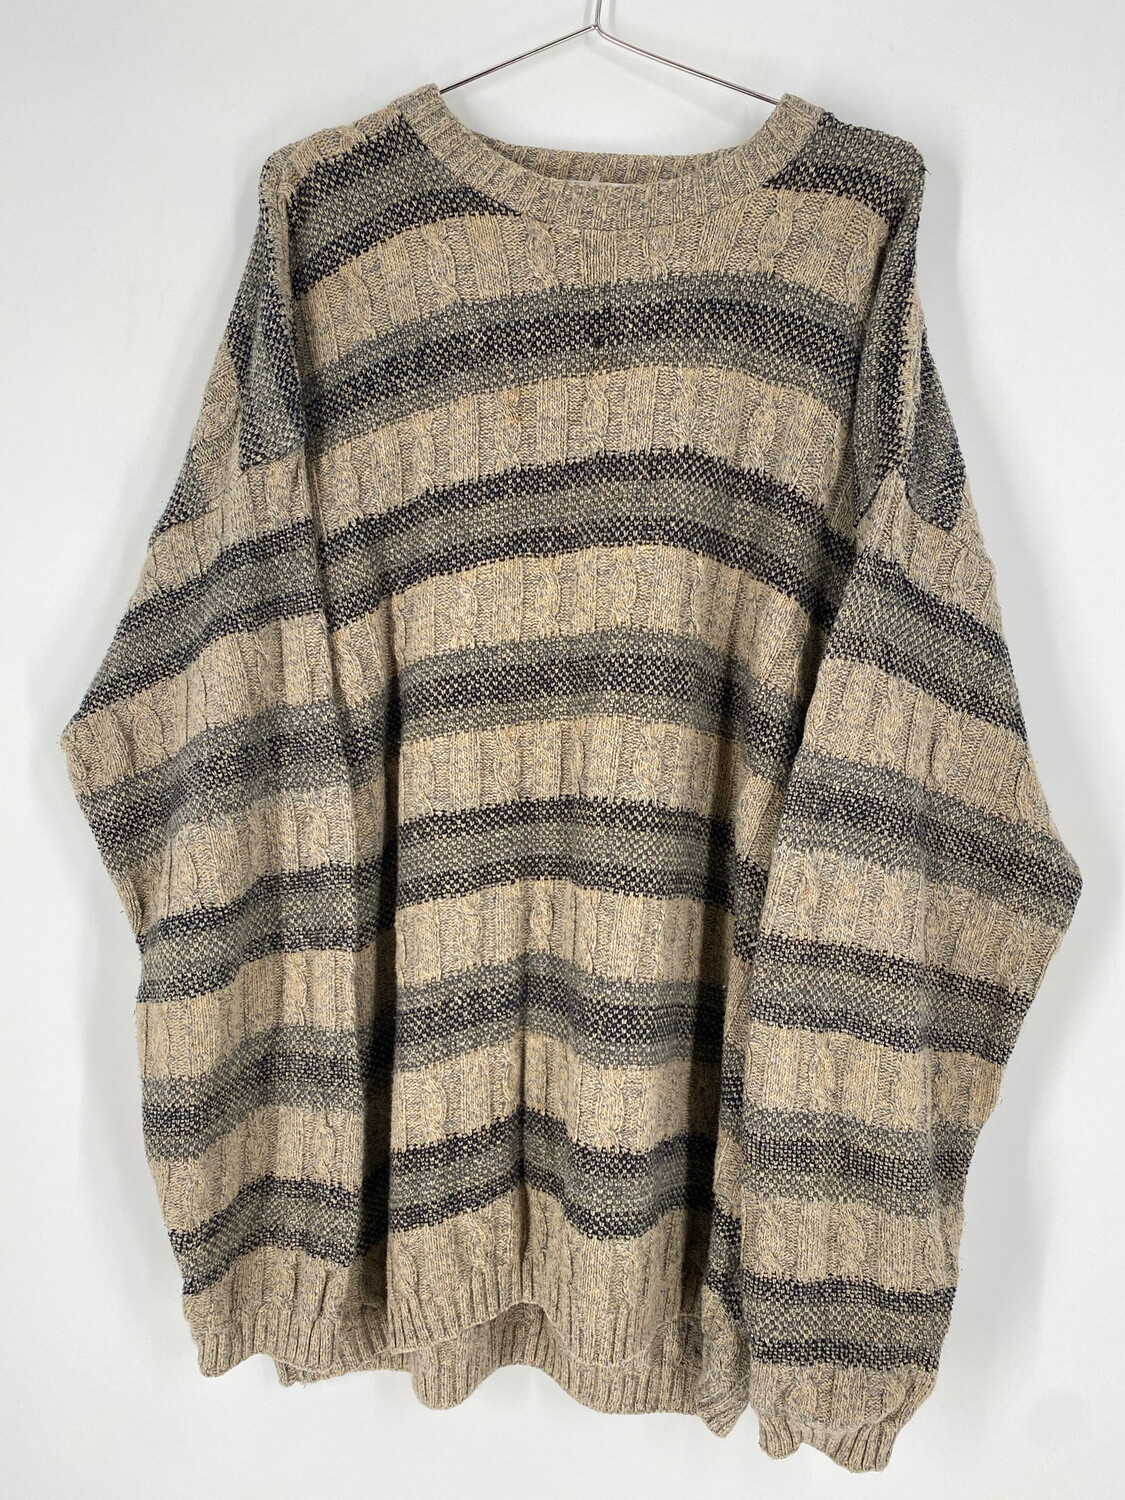 Bill Blass Vintage Striped Sweater Size XL